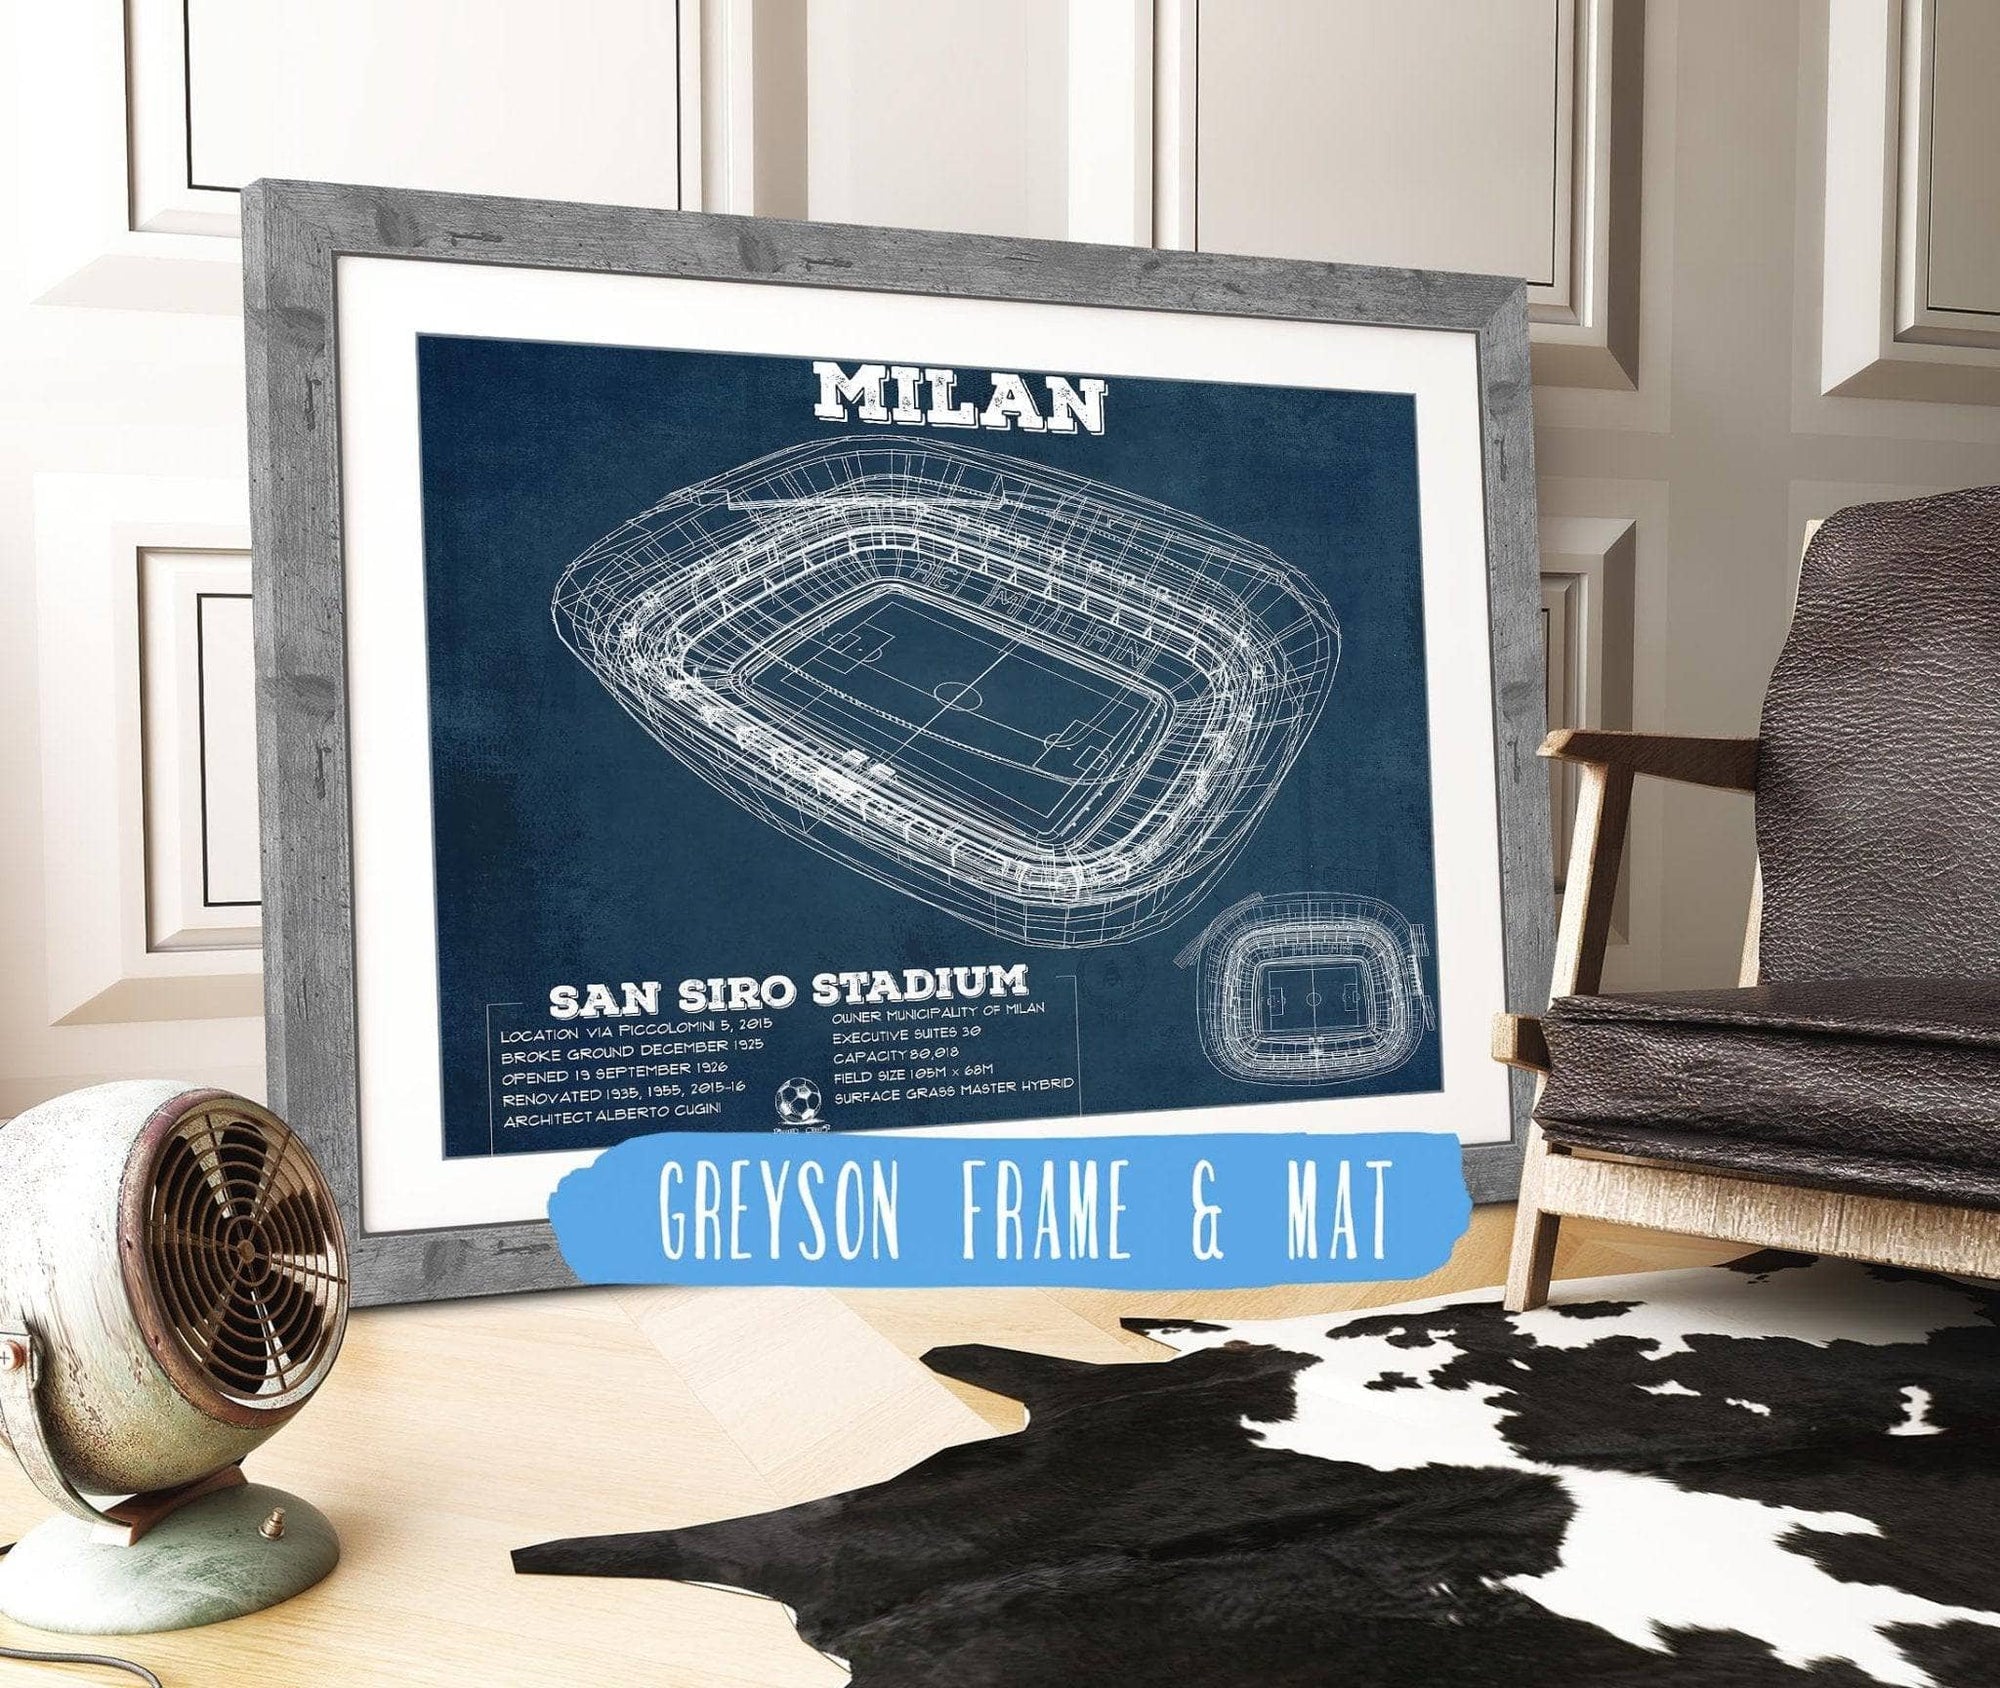 Cutler West Soccer Collection 14" x 11" / Greyson Frame & Mat AC Milan San Siro Stadium Soccer Print 735408000-TOP_39109